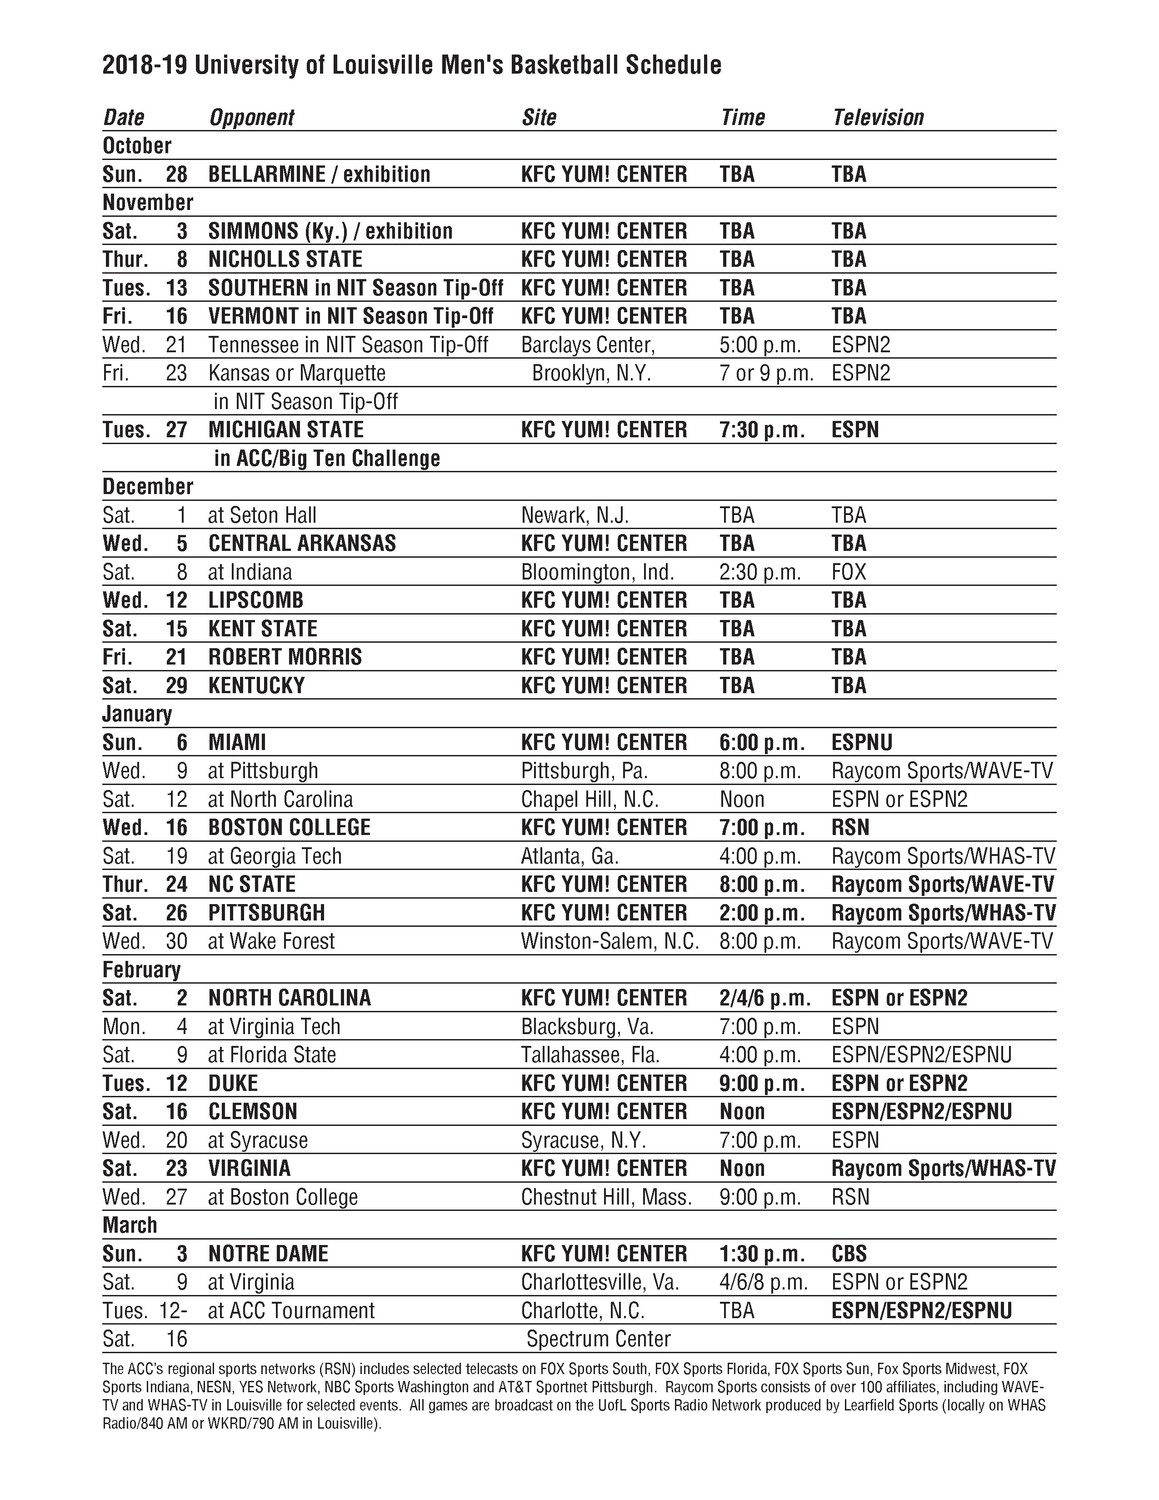 Complete Louisville Basketball Schedule Released 